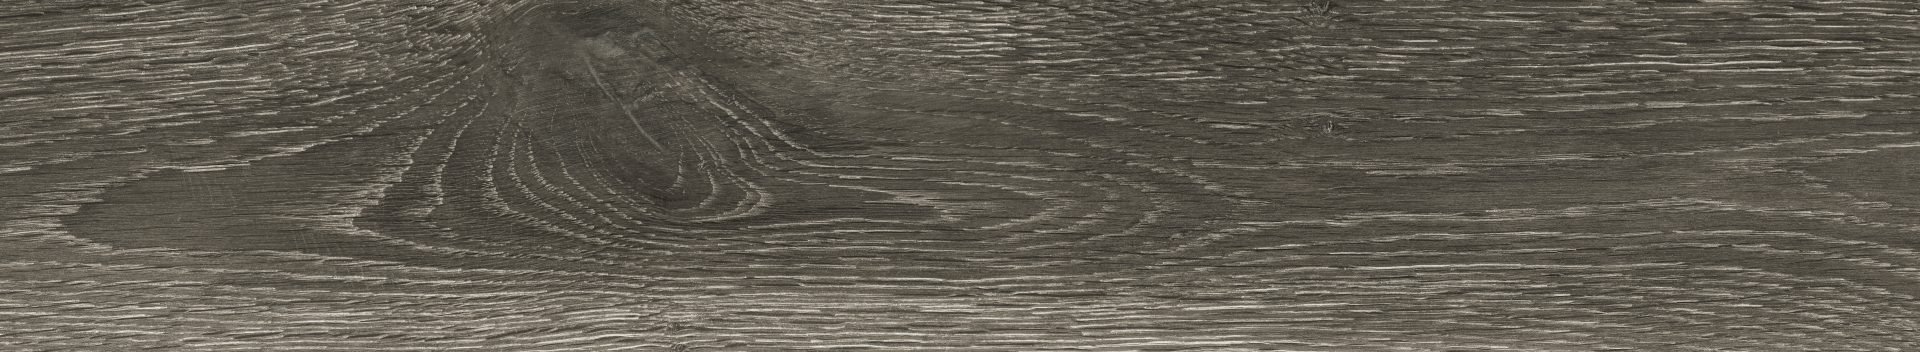 Tramonto grigio - dlaždice 11x60 šedá 157491